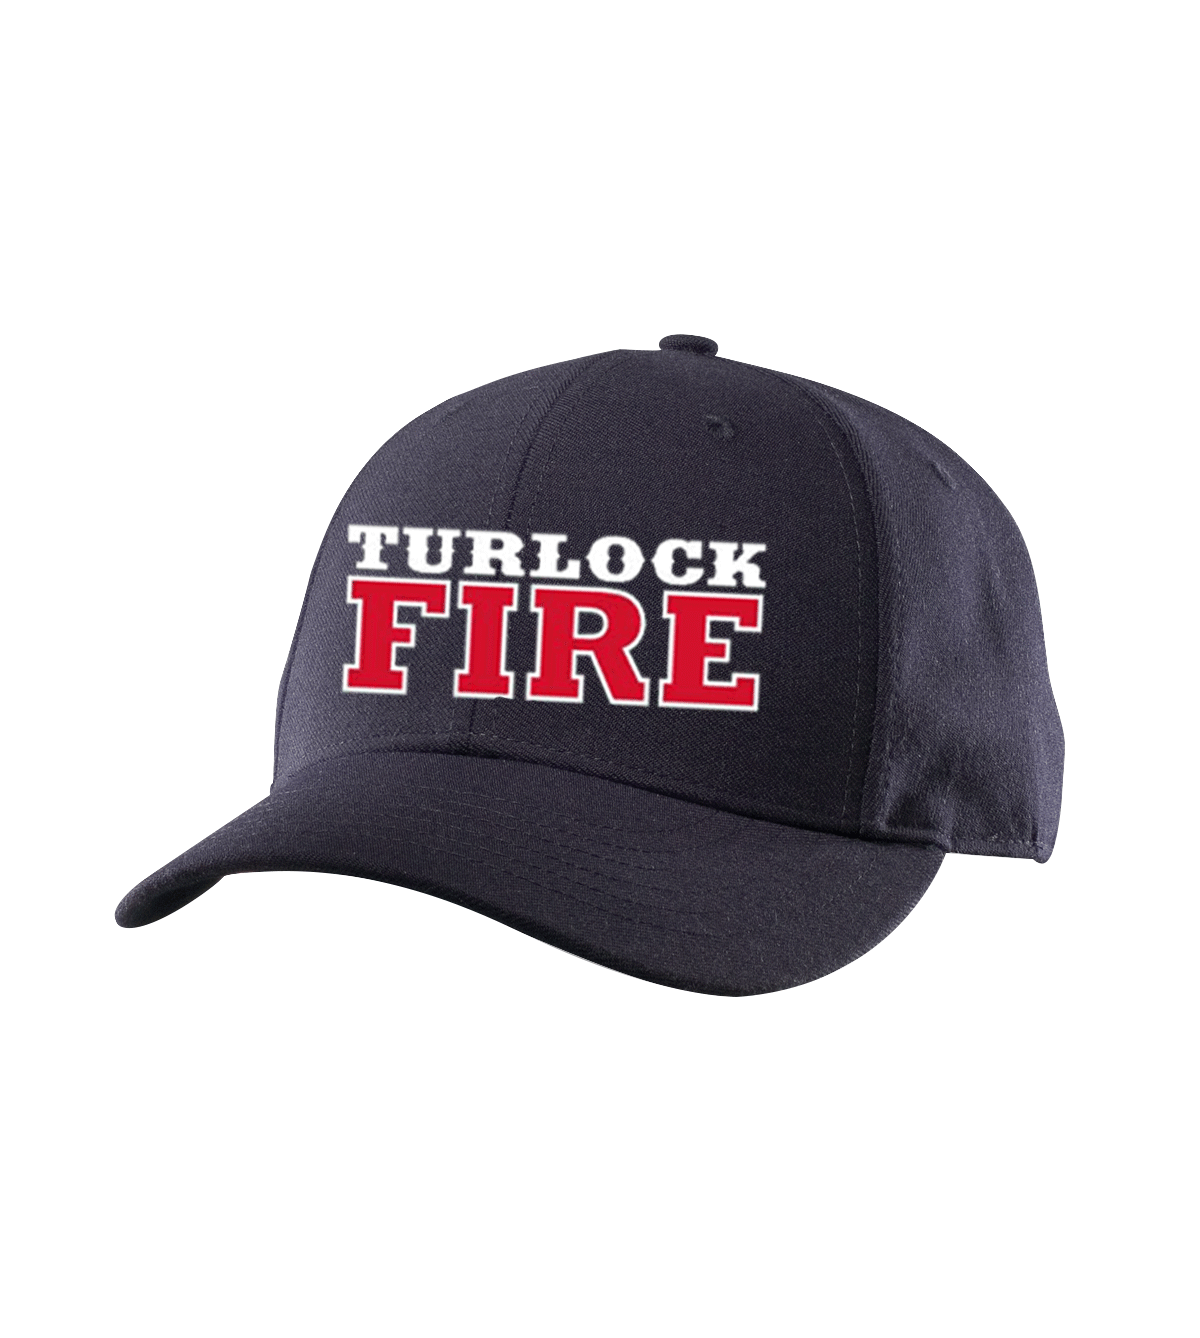 Turlock Fire Fitted Hat